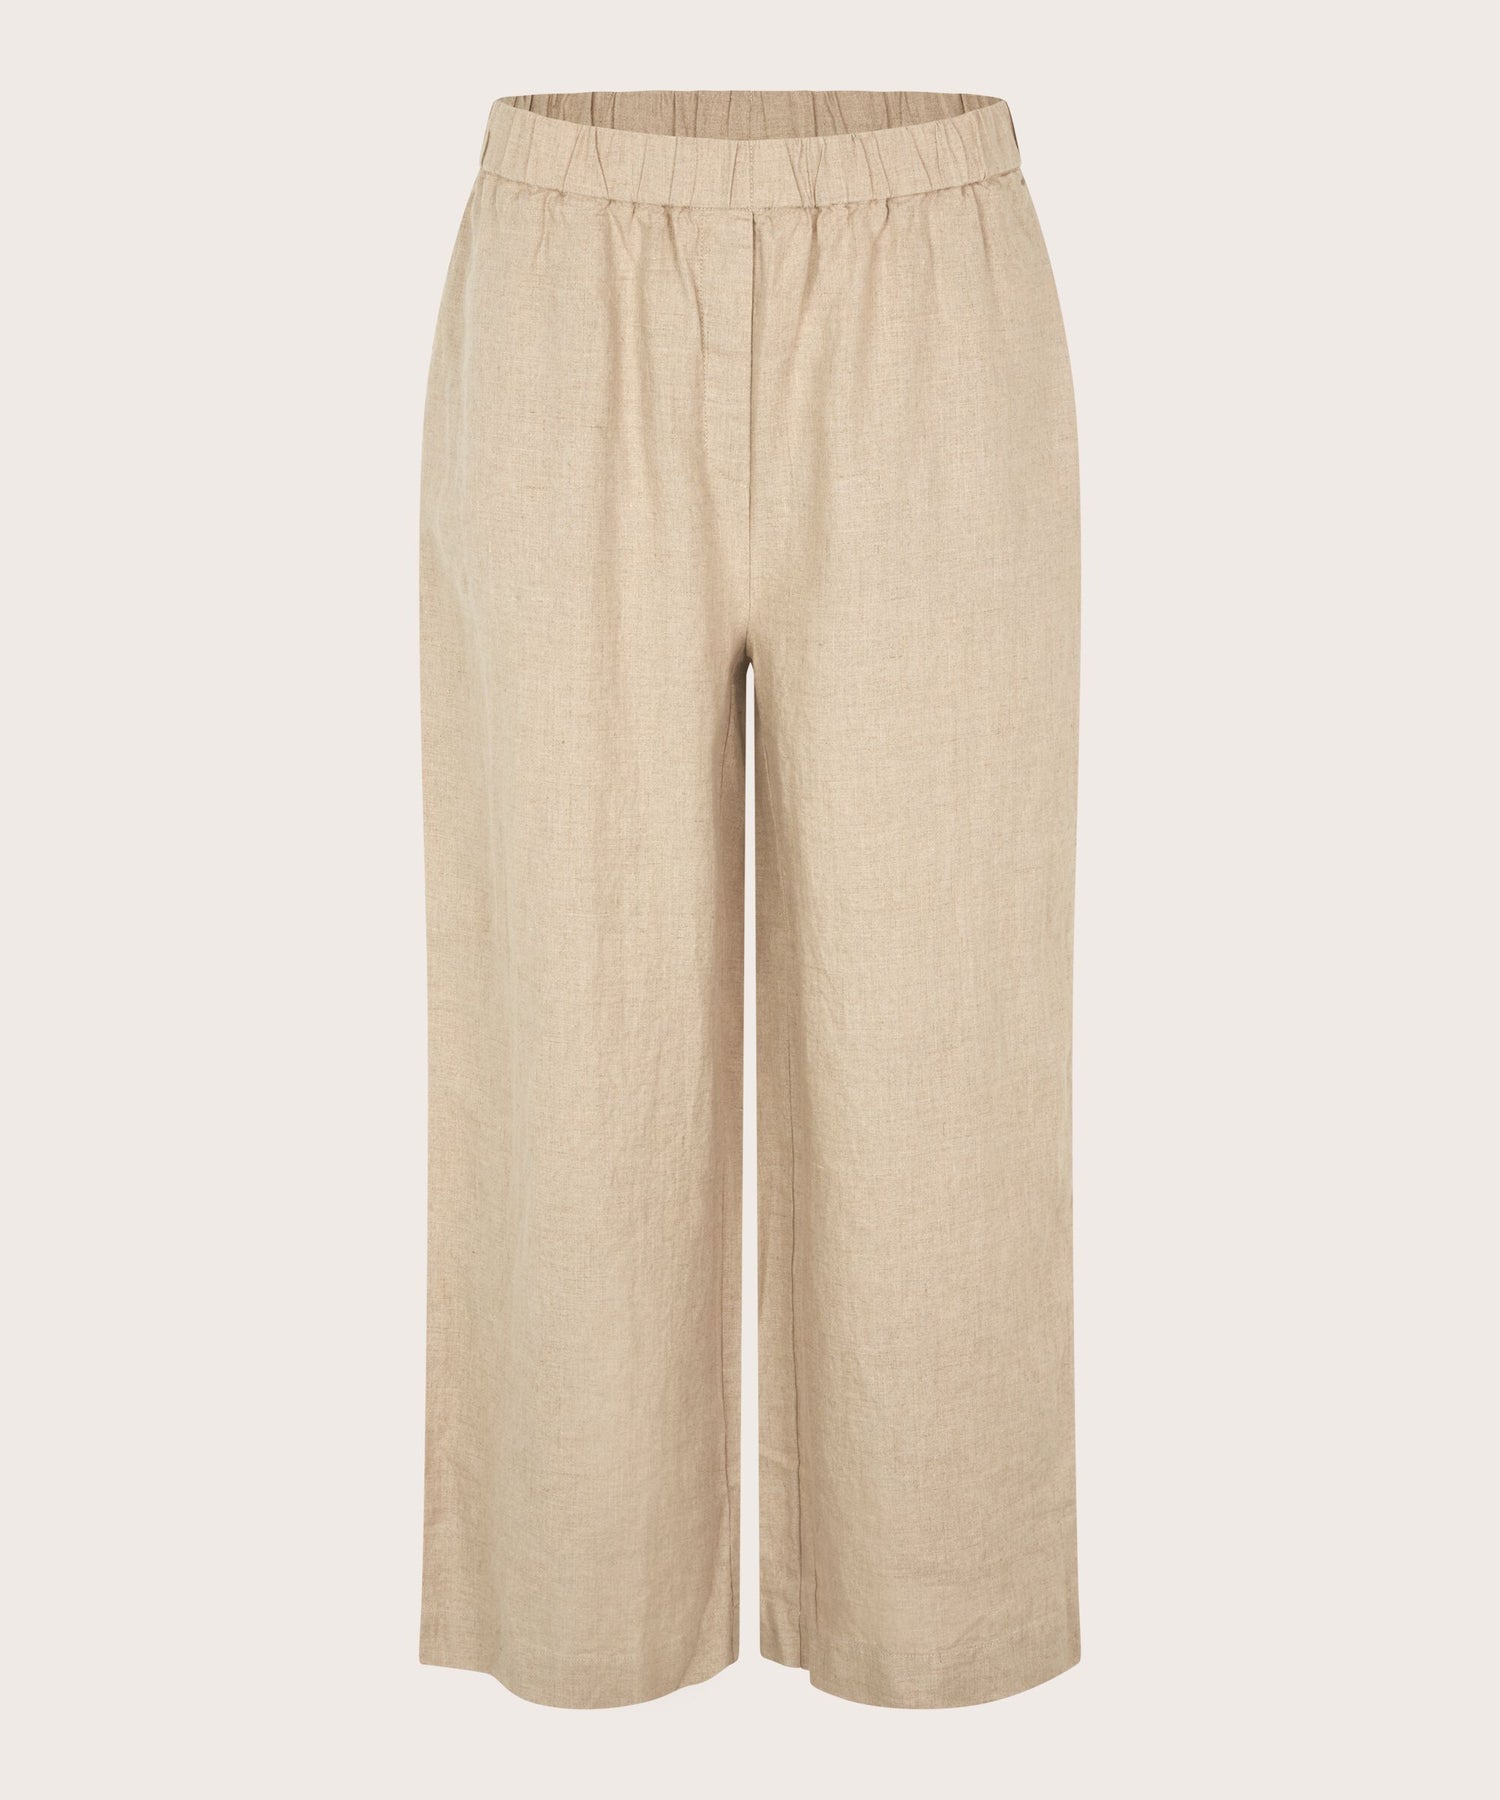 Masai Parini Linen Trousers